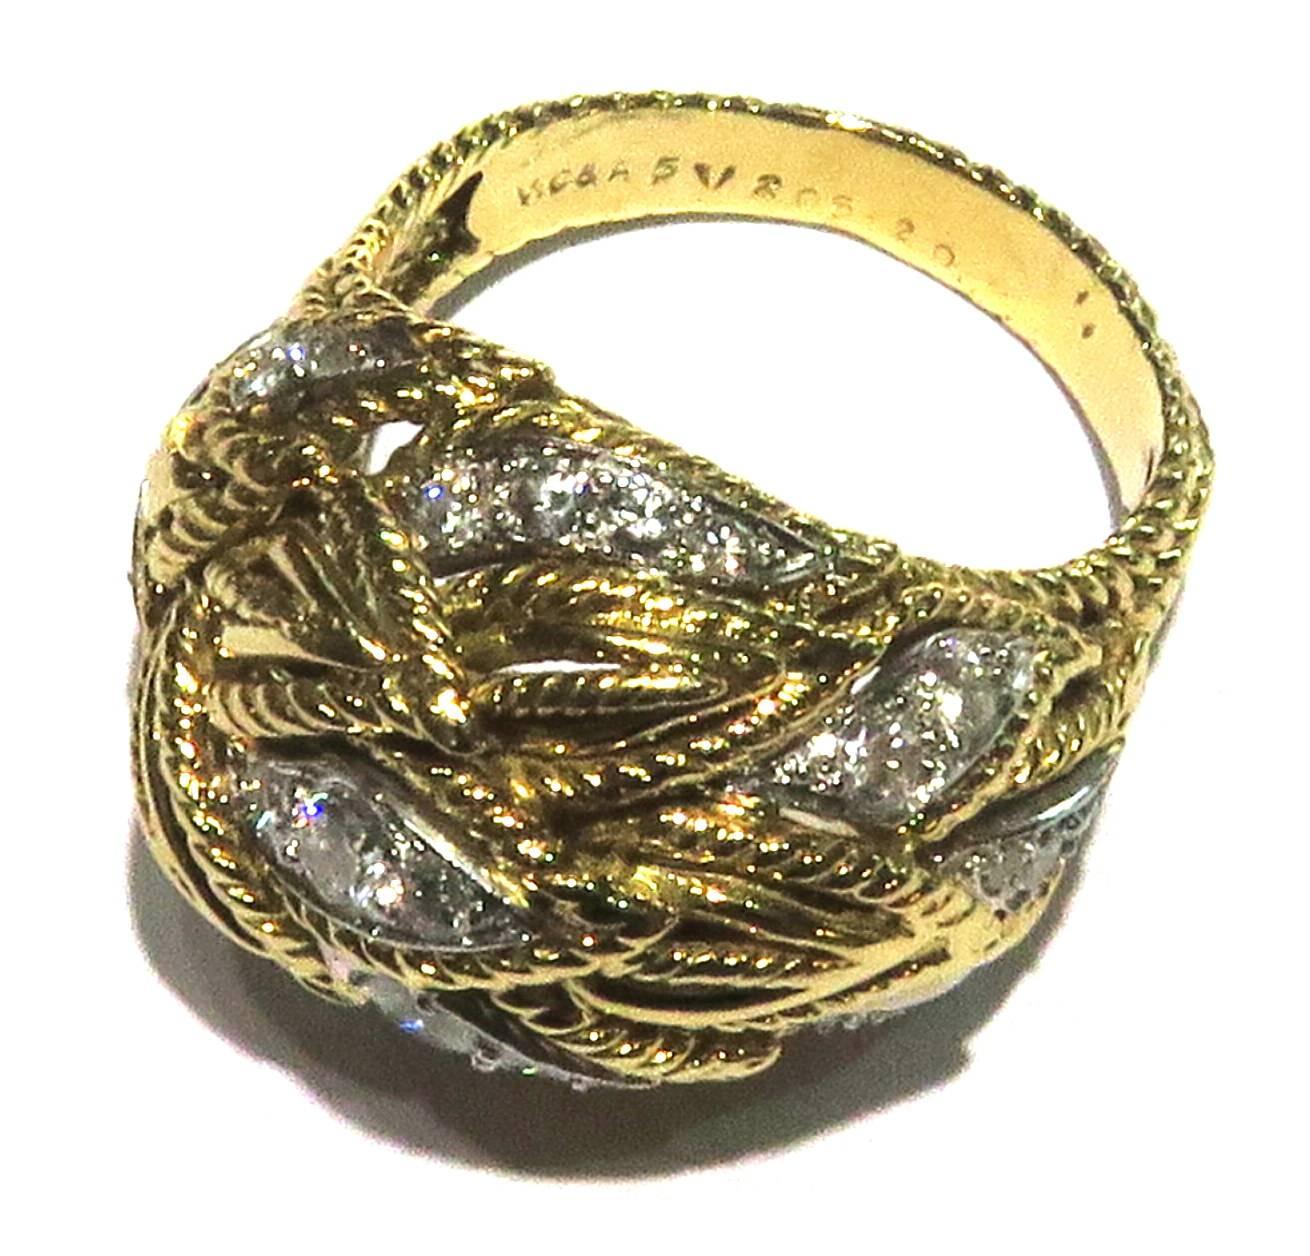 Timeless Van Cleef & Arpels Diamonds in Woven Leaf Design Gold Domed Ring 9